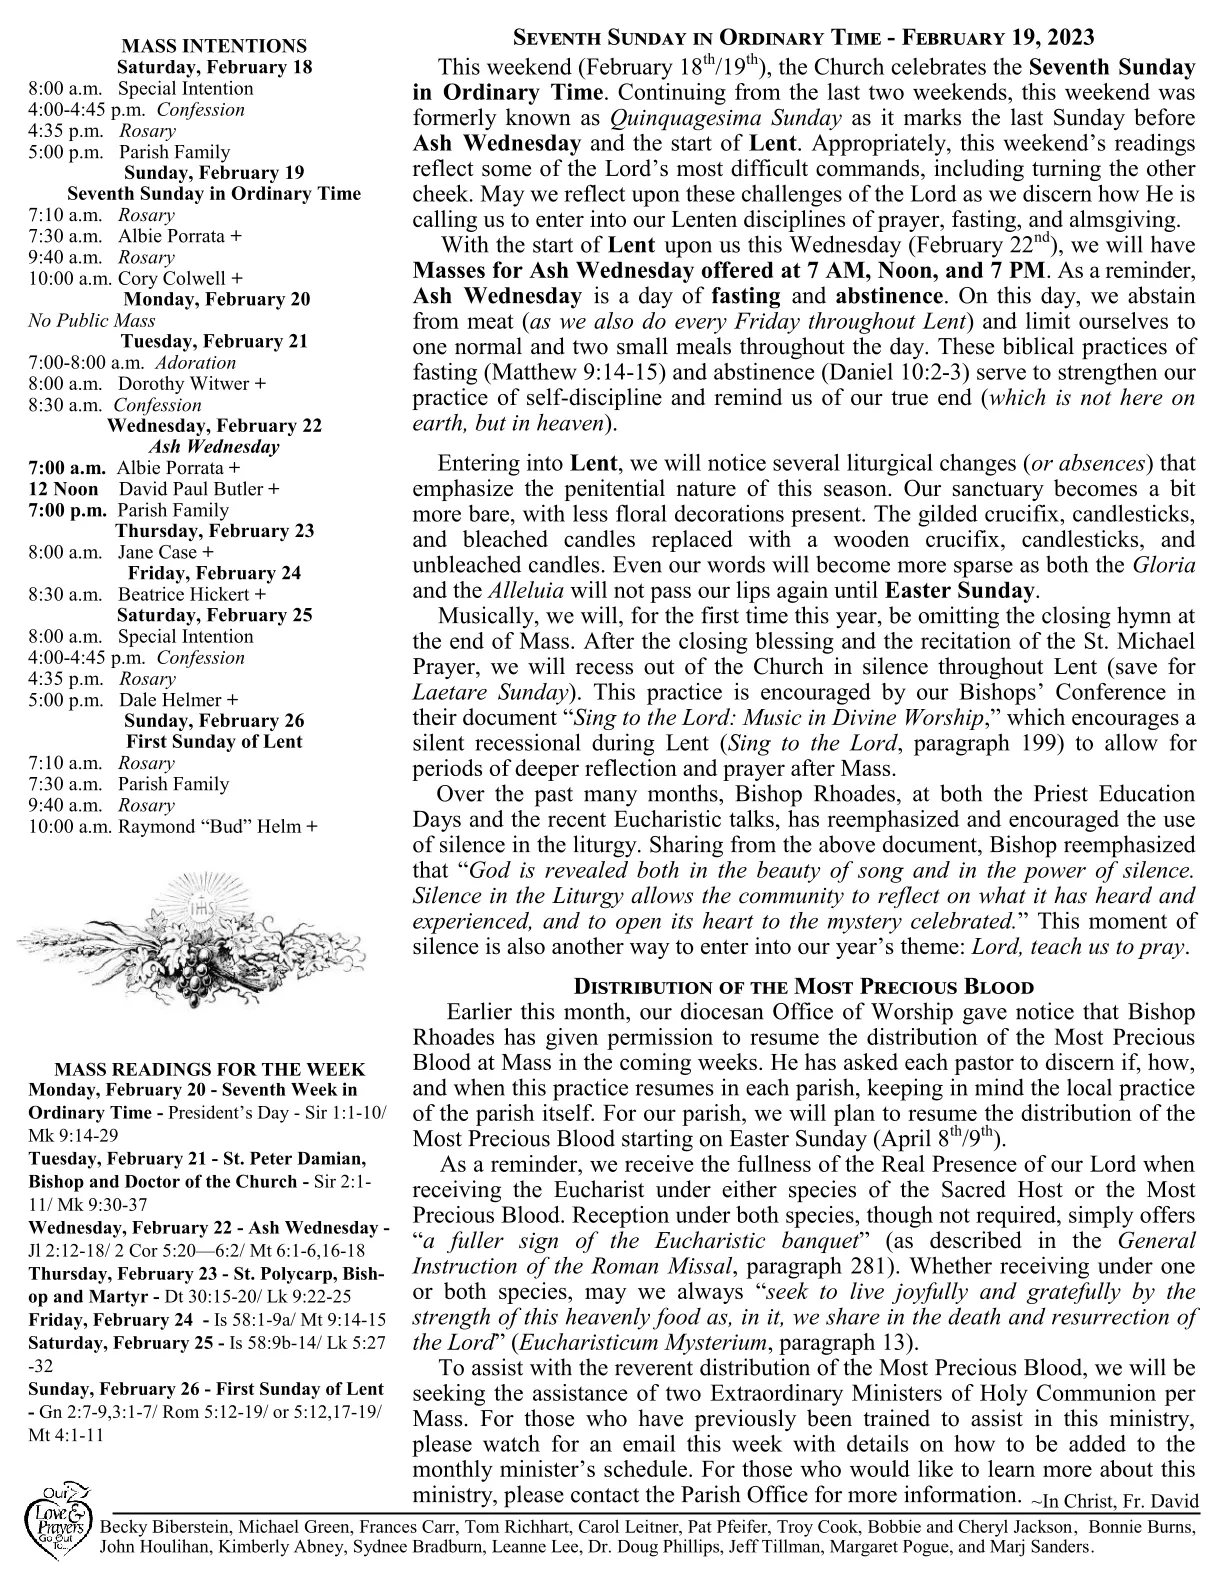 Feb 19, 2023 - Bulletin - Page 2